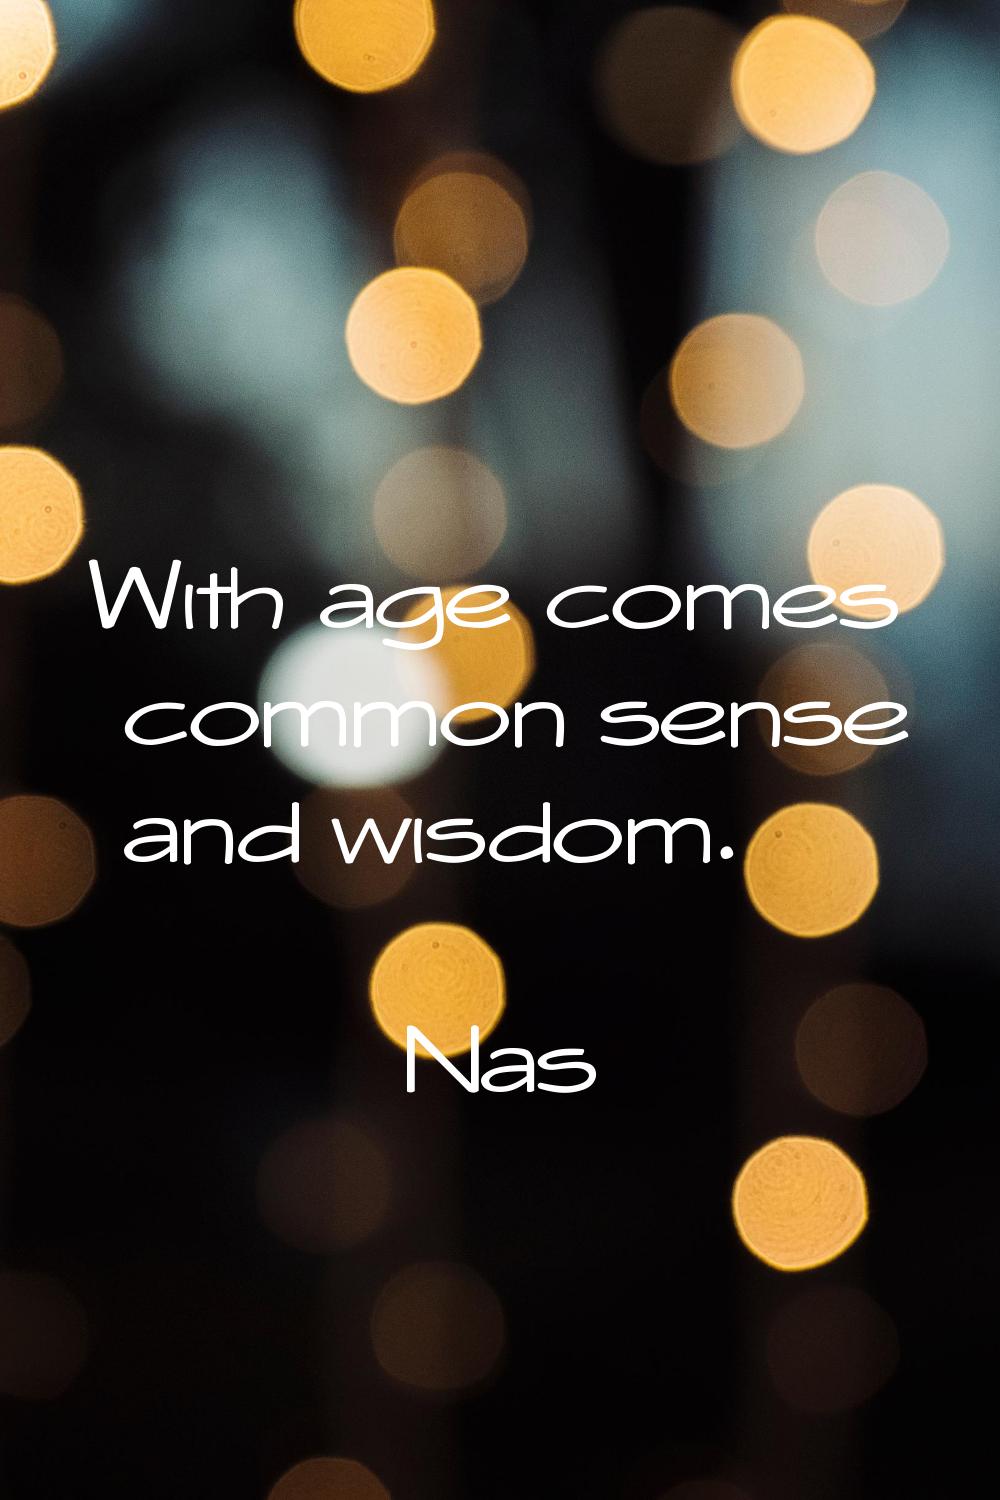 With age comes common sense and wisdom.